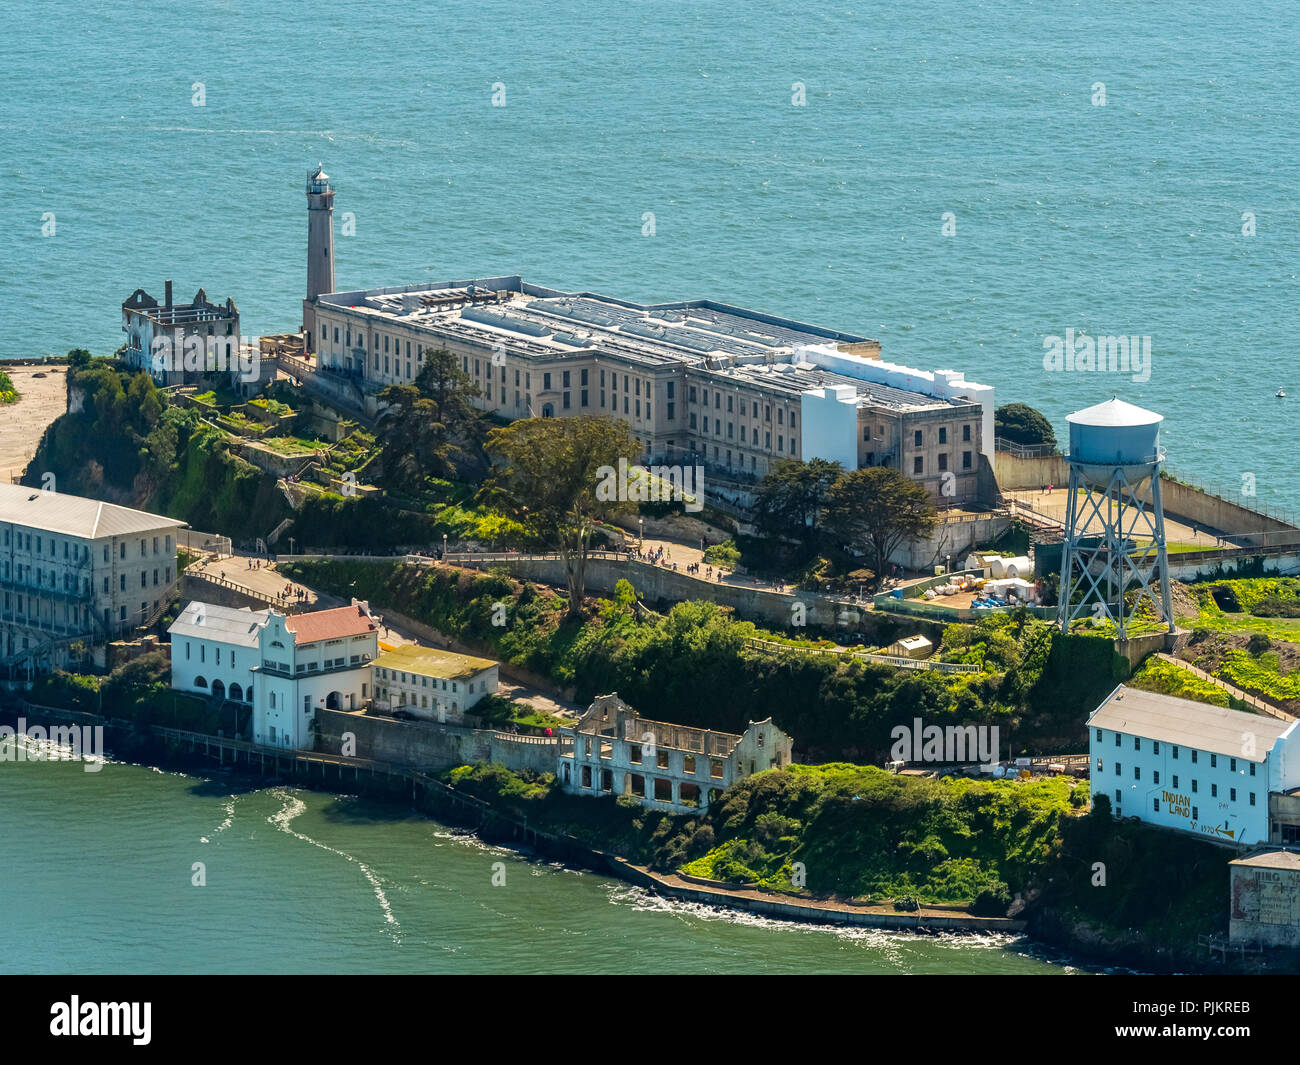 Prison Island Alcatraz, Alcatraz Island with Lighthouse, San Francisco, San Francisco Bay Area, United States of America, California, USA Stock Photo